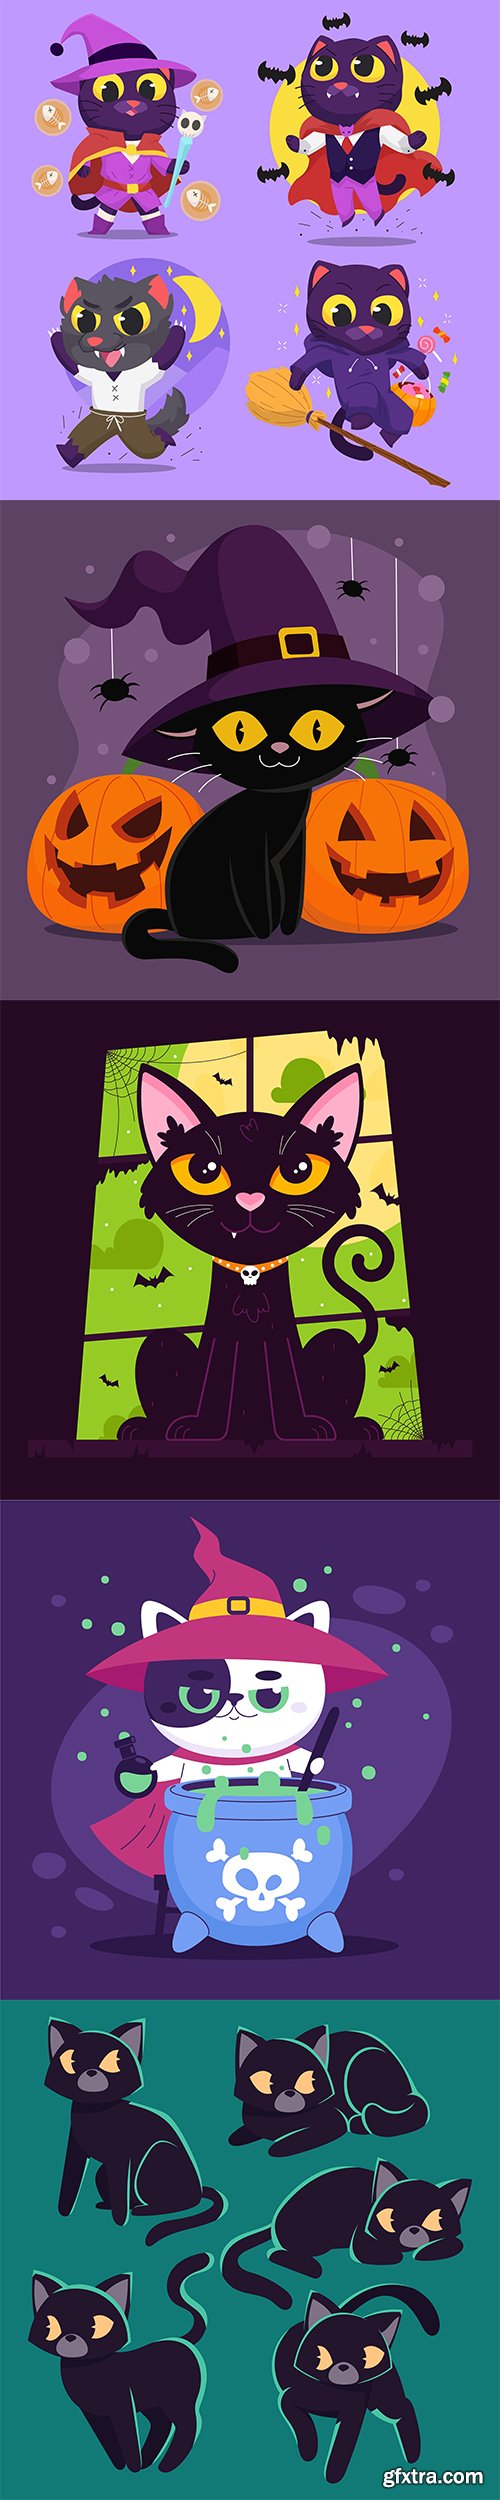 Hand-drawn flat halloween cats illustrations vol 3